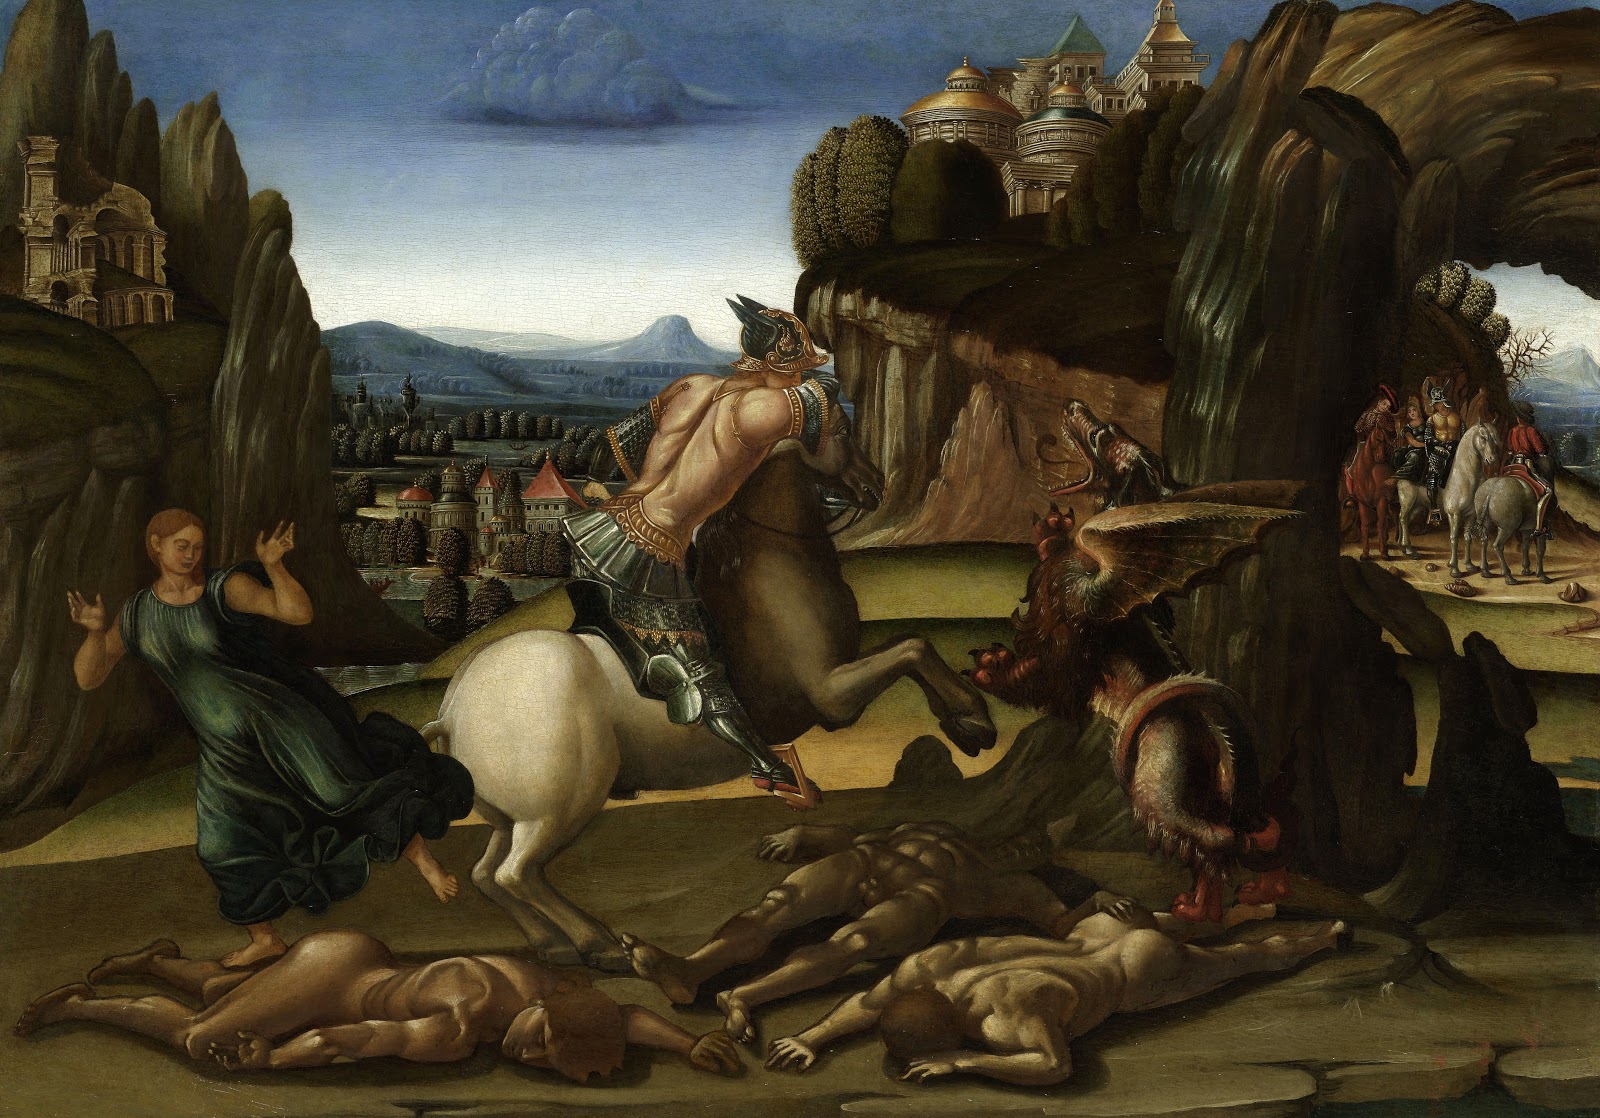 Luca+Signorelli-1445-1523 (20).jpg